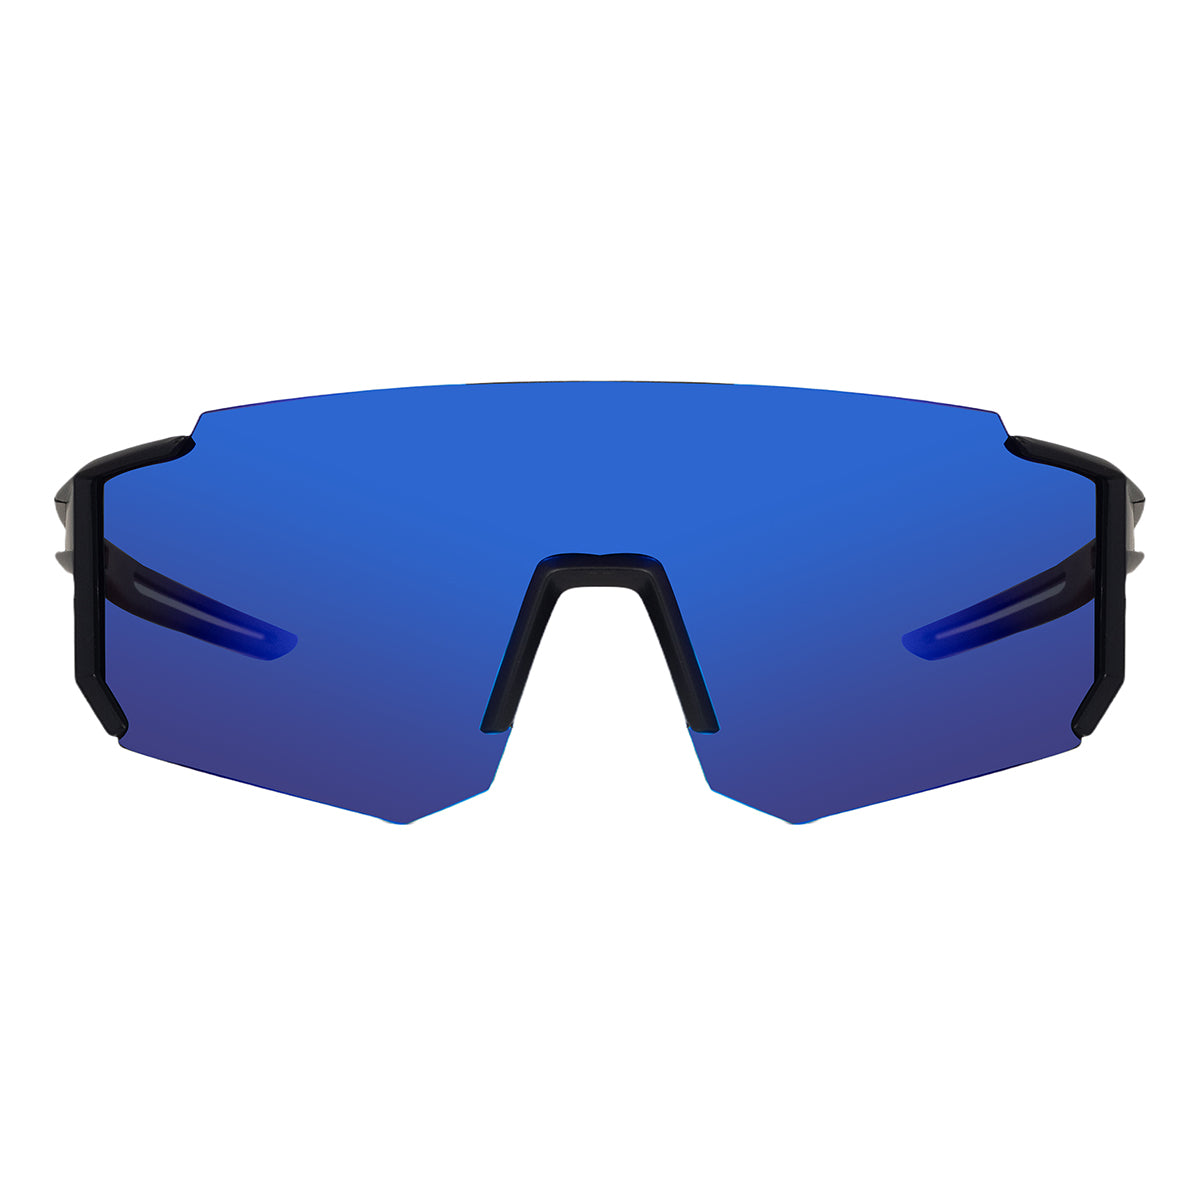 Retron Active Sunglasses (Polarized Protection)